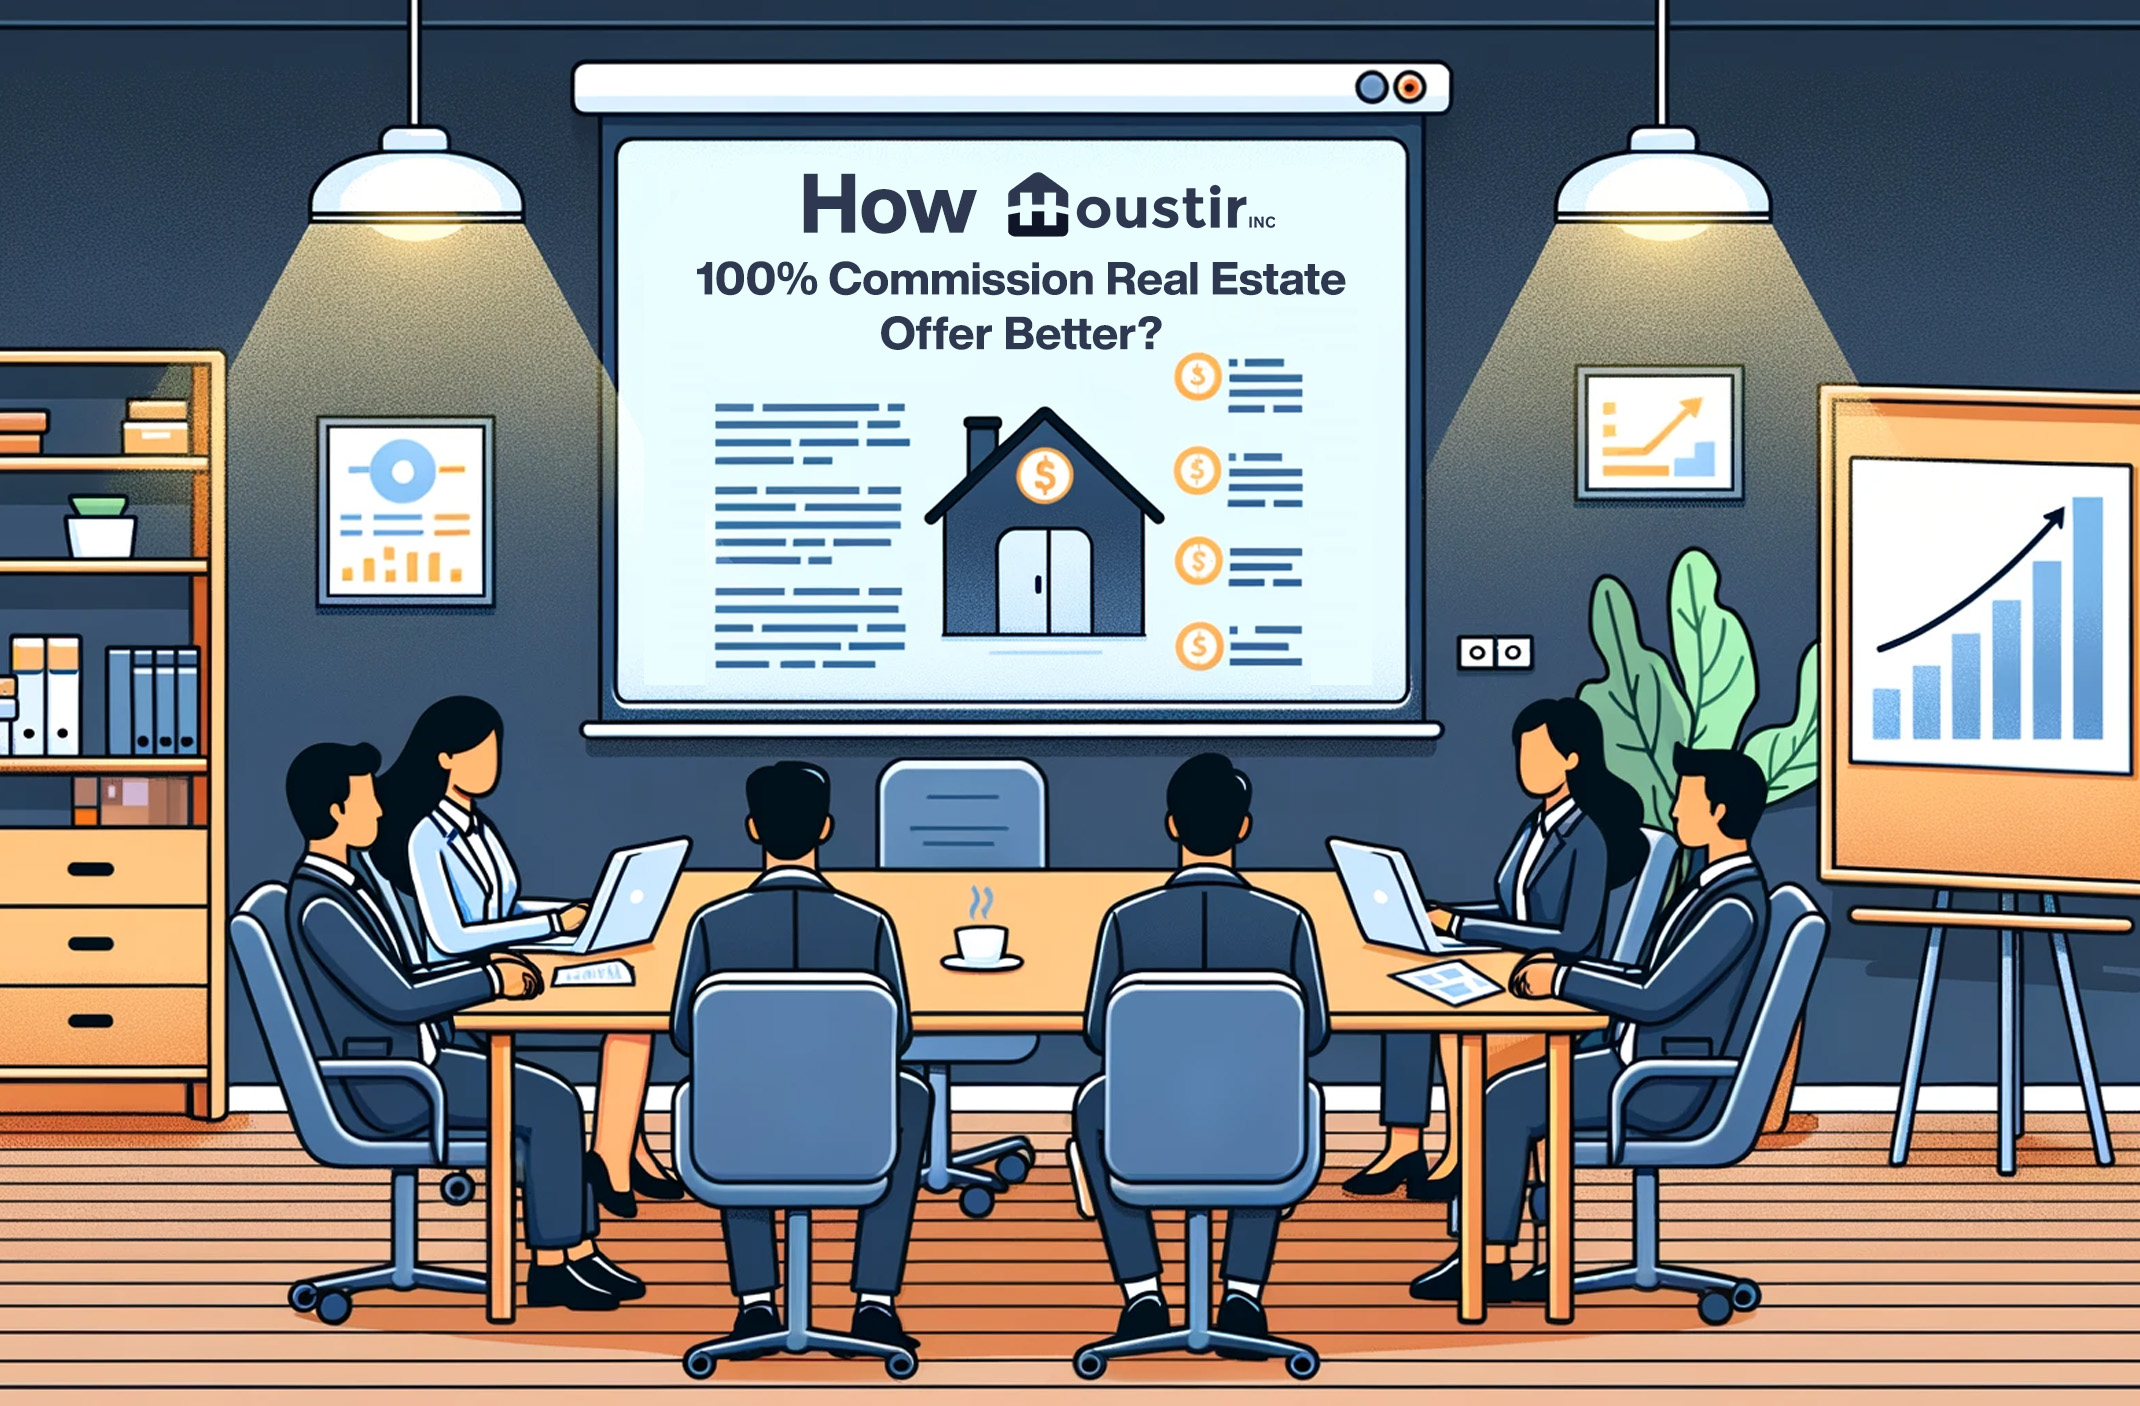 How is Houstir's 100% Commission Real Estate Offer Better?